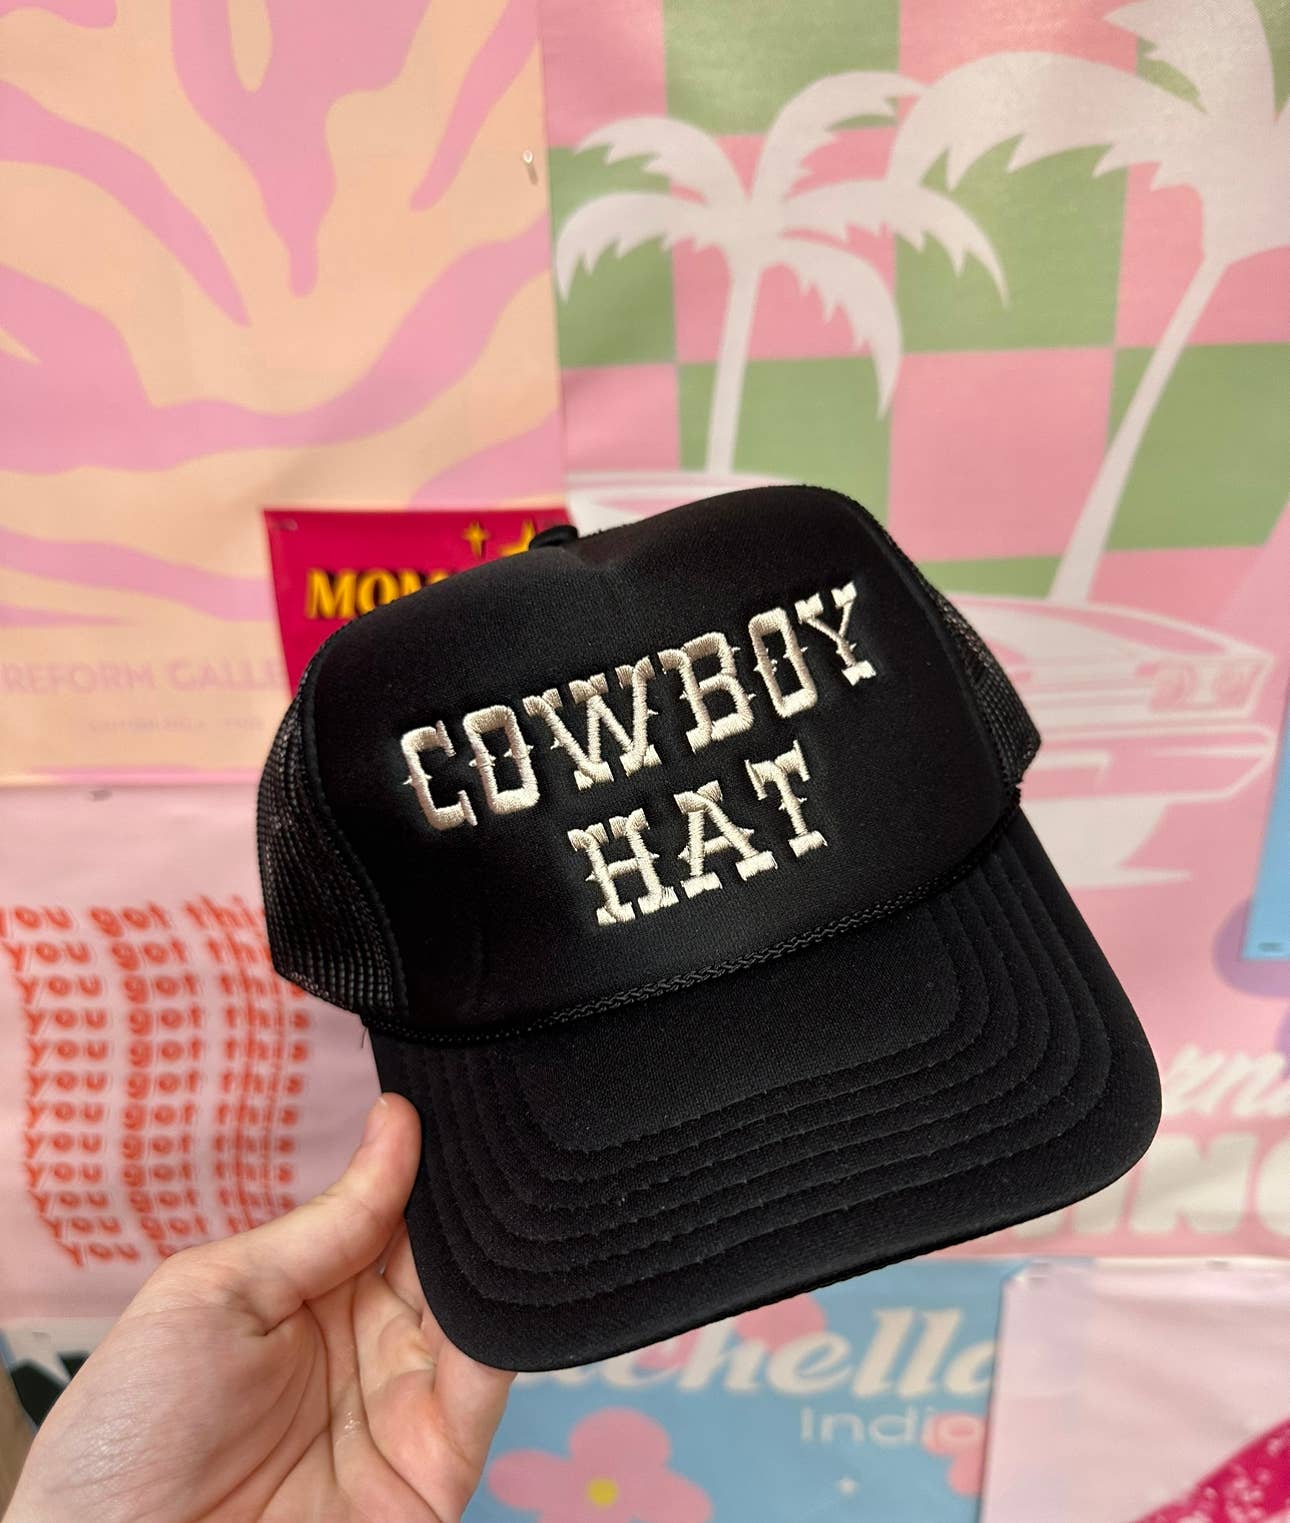 Black Cowboy Hat Trucker Hat: Embrodiary